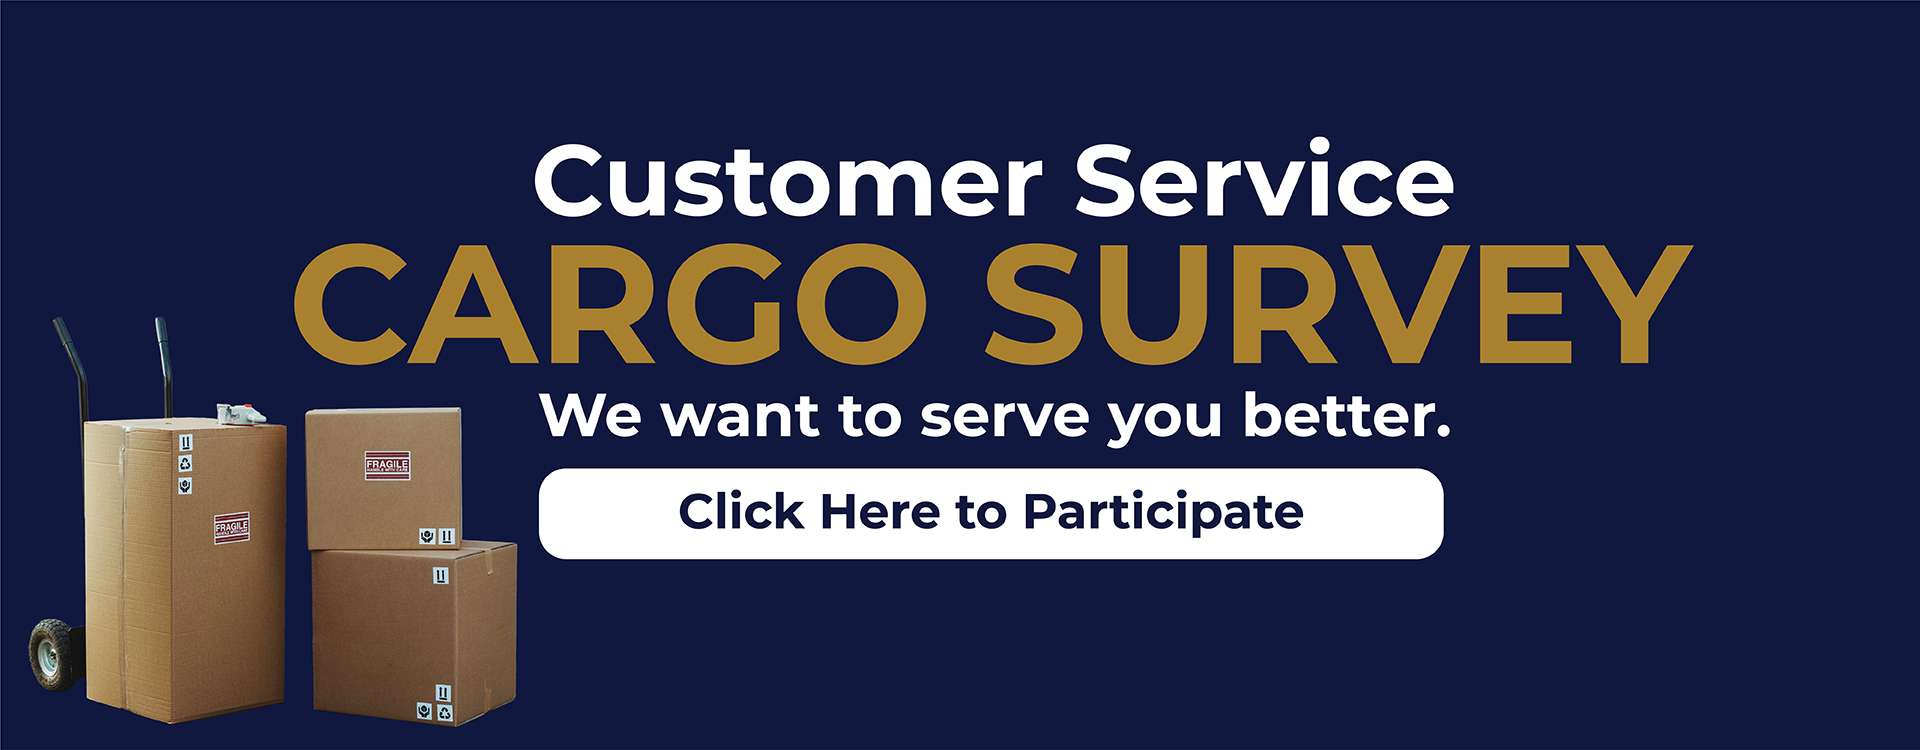 Customer Service Cargo Survey